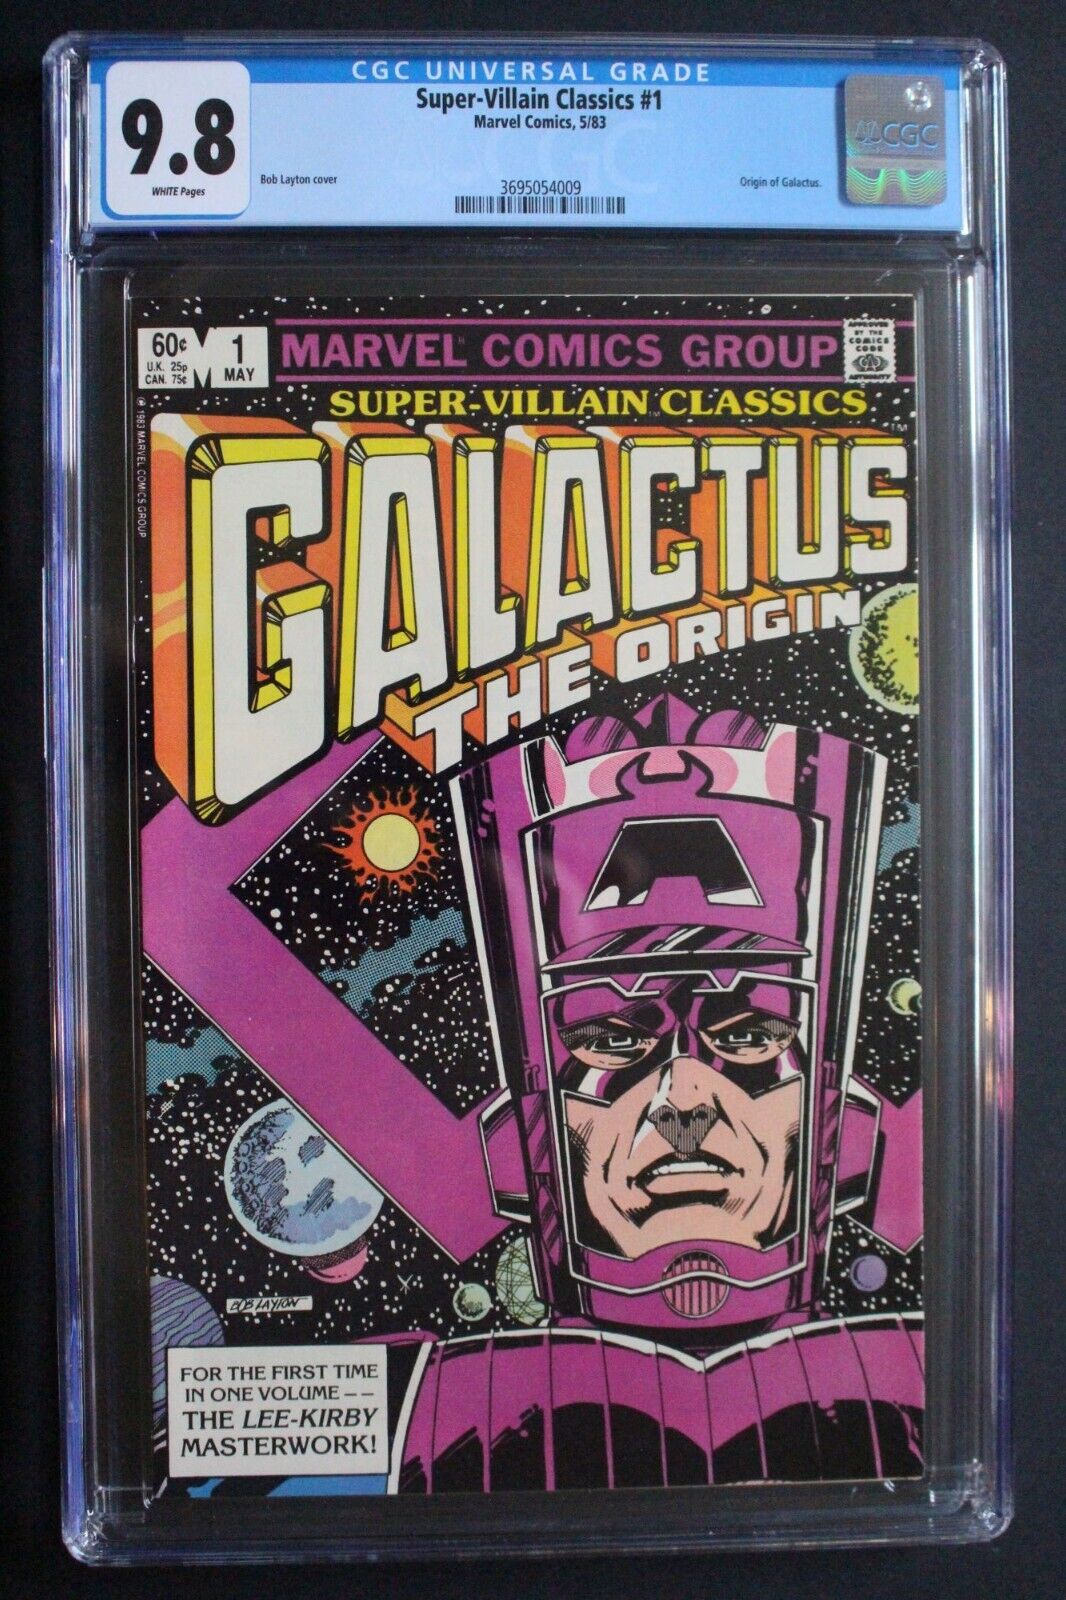 Super Villain Classics GALACTUS THE ORIGIN #1 KIRBY Lee Layton 1983 MCU CGC 9.8